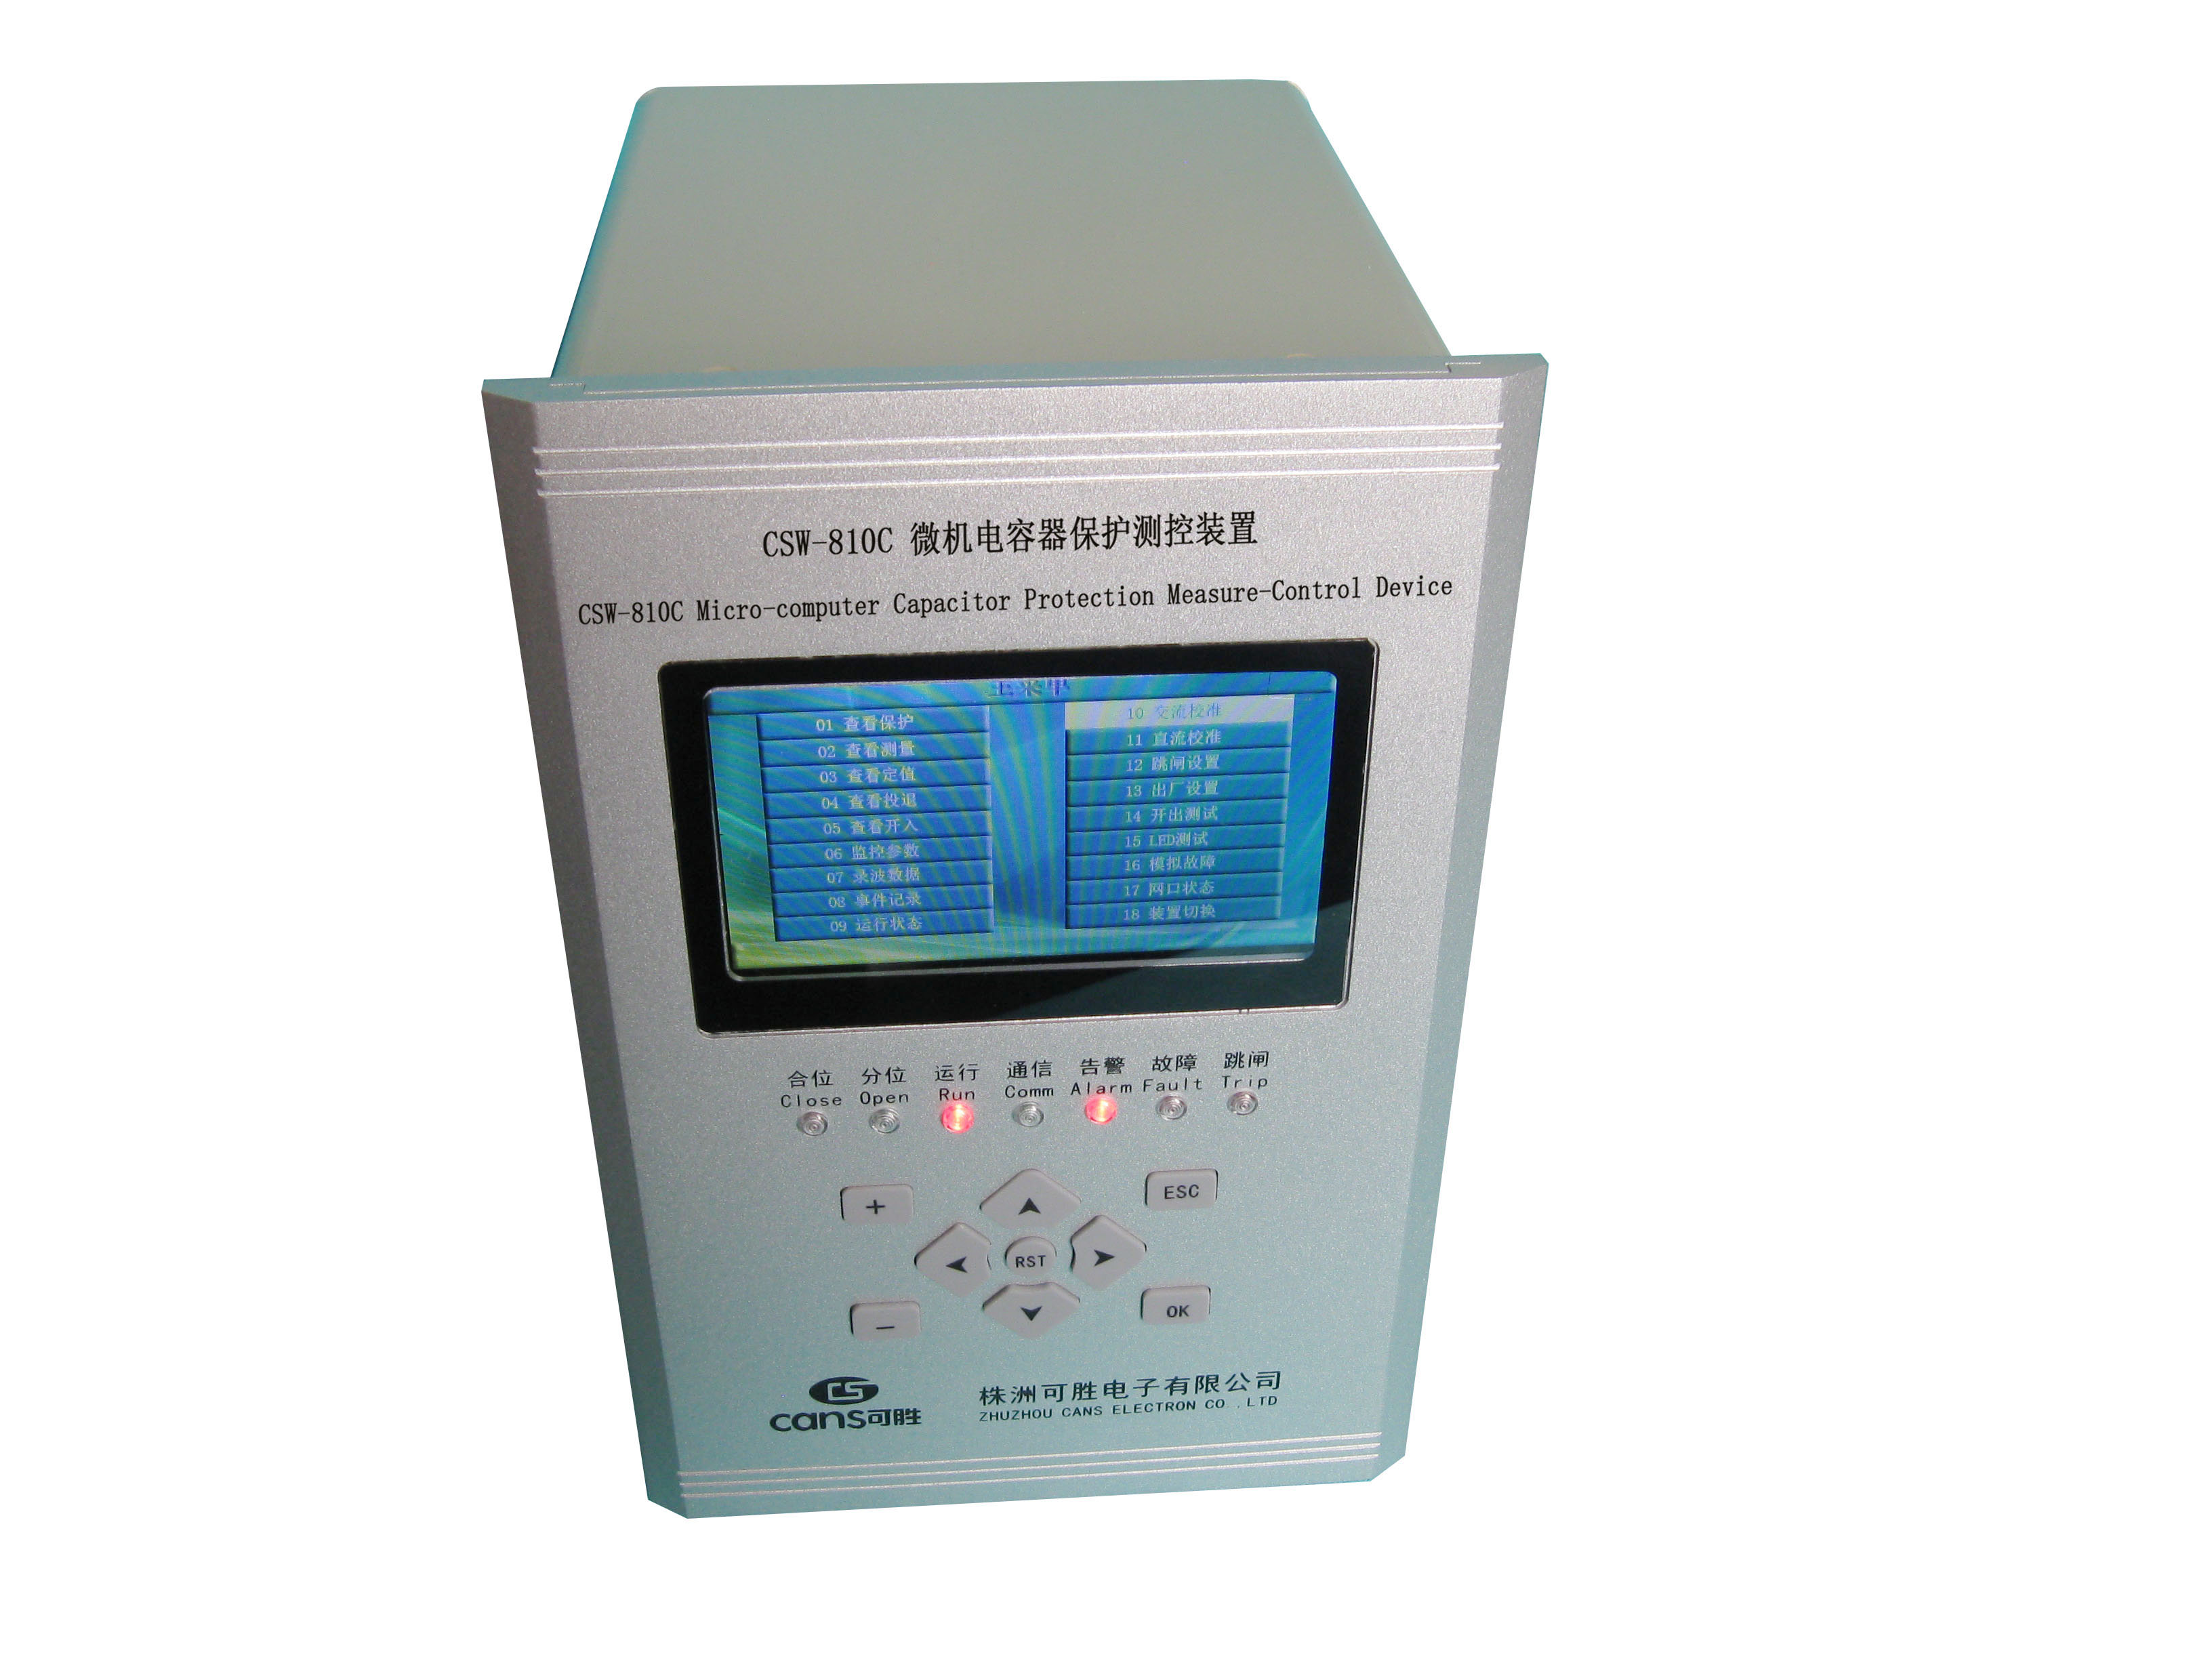 CSW-810C 微机电容器保护测控装置 兼容SEEC-810C  湖南株洲可胜电子